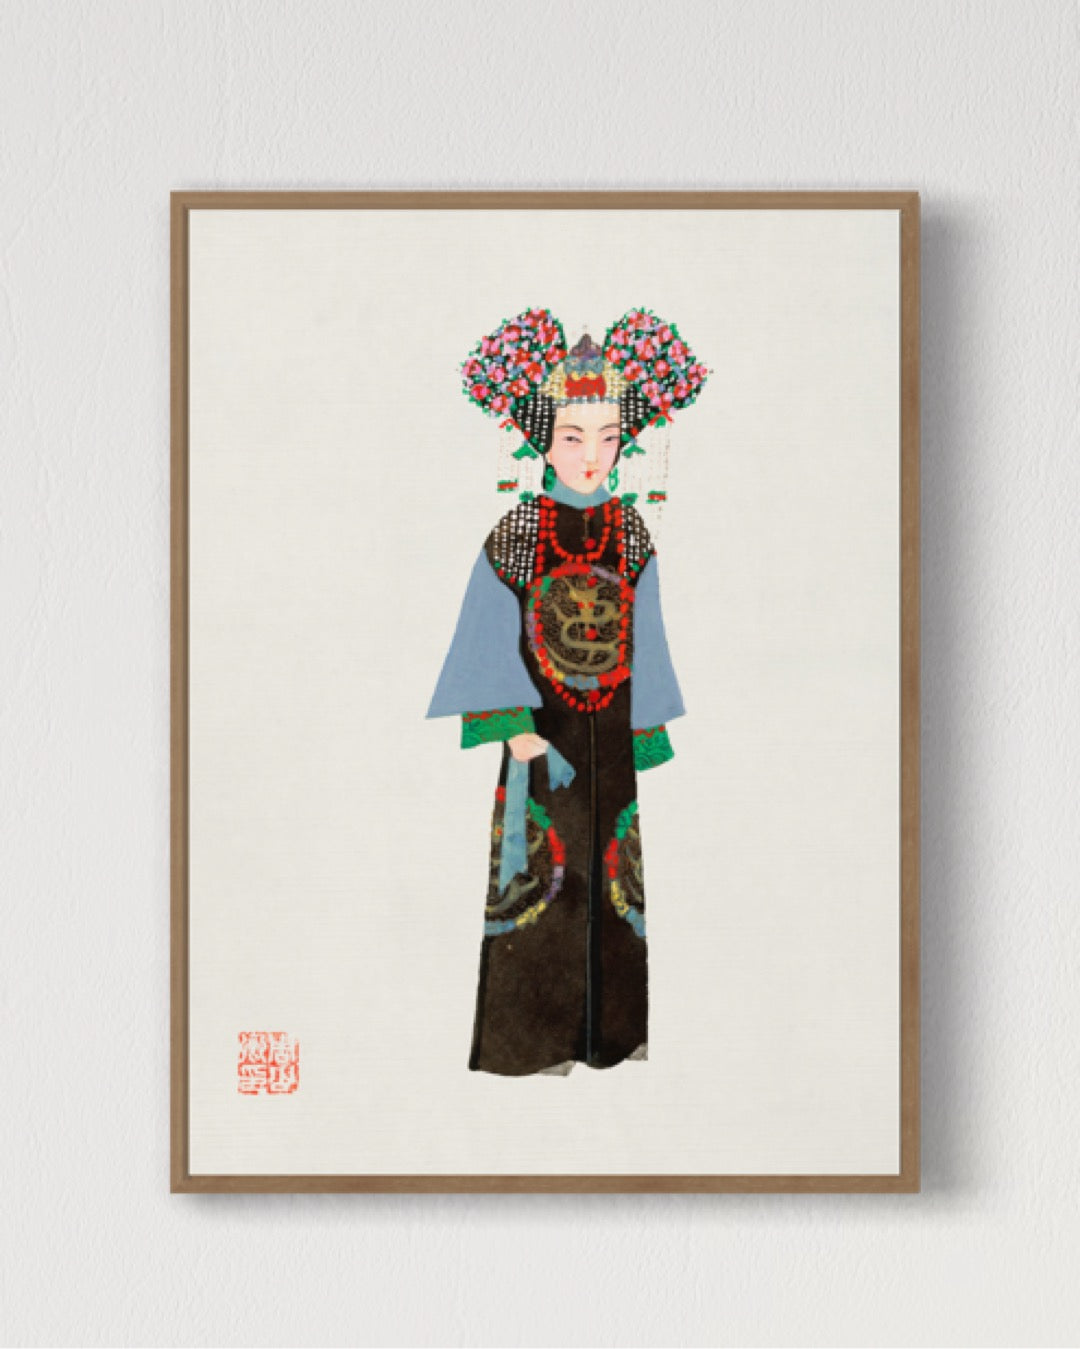 Chinese Empress costume